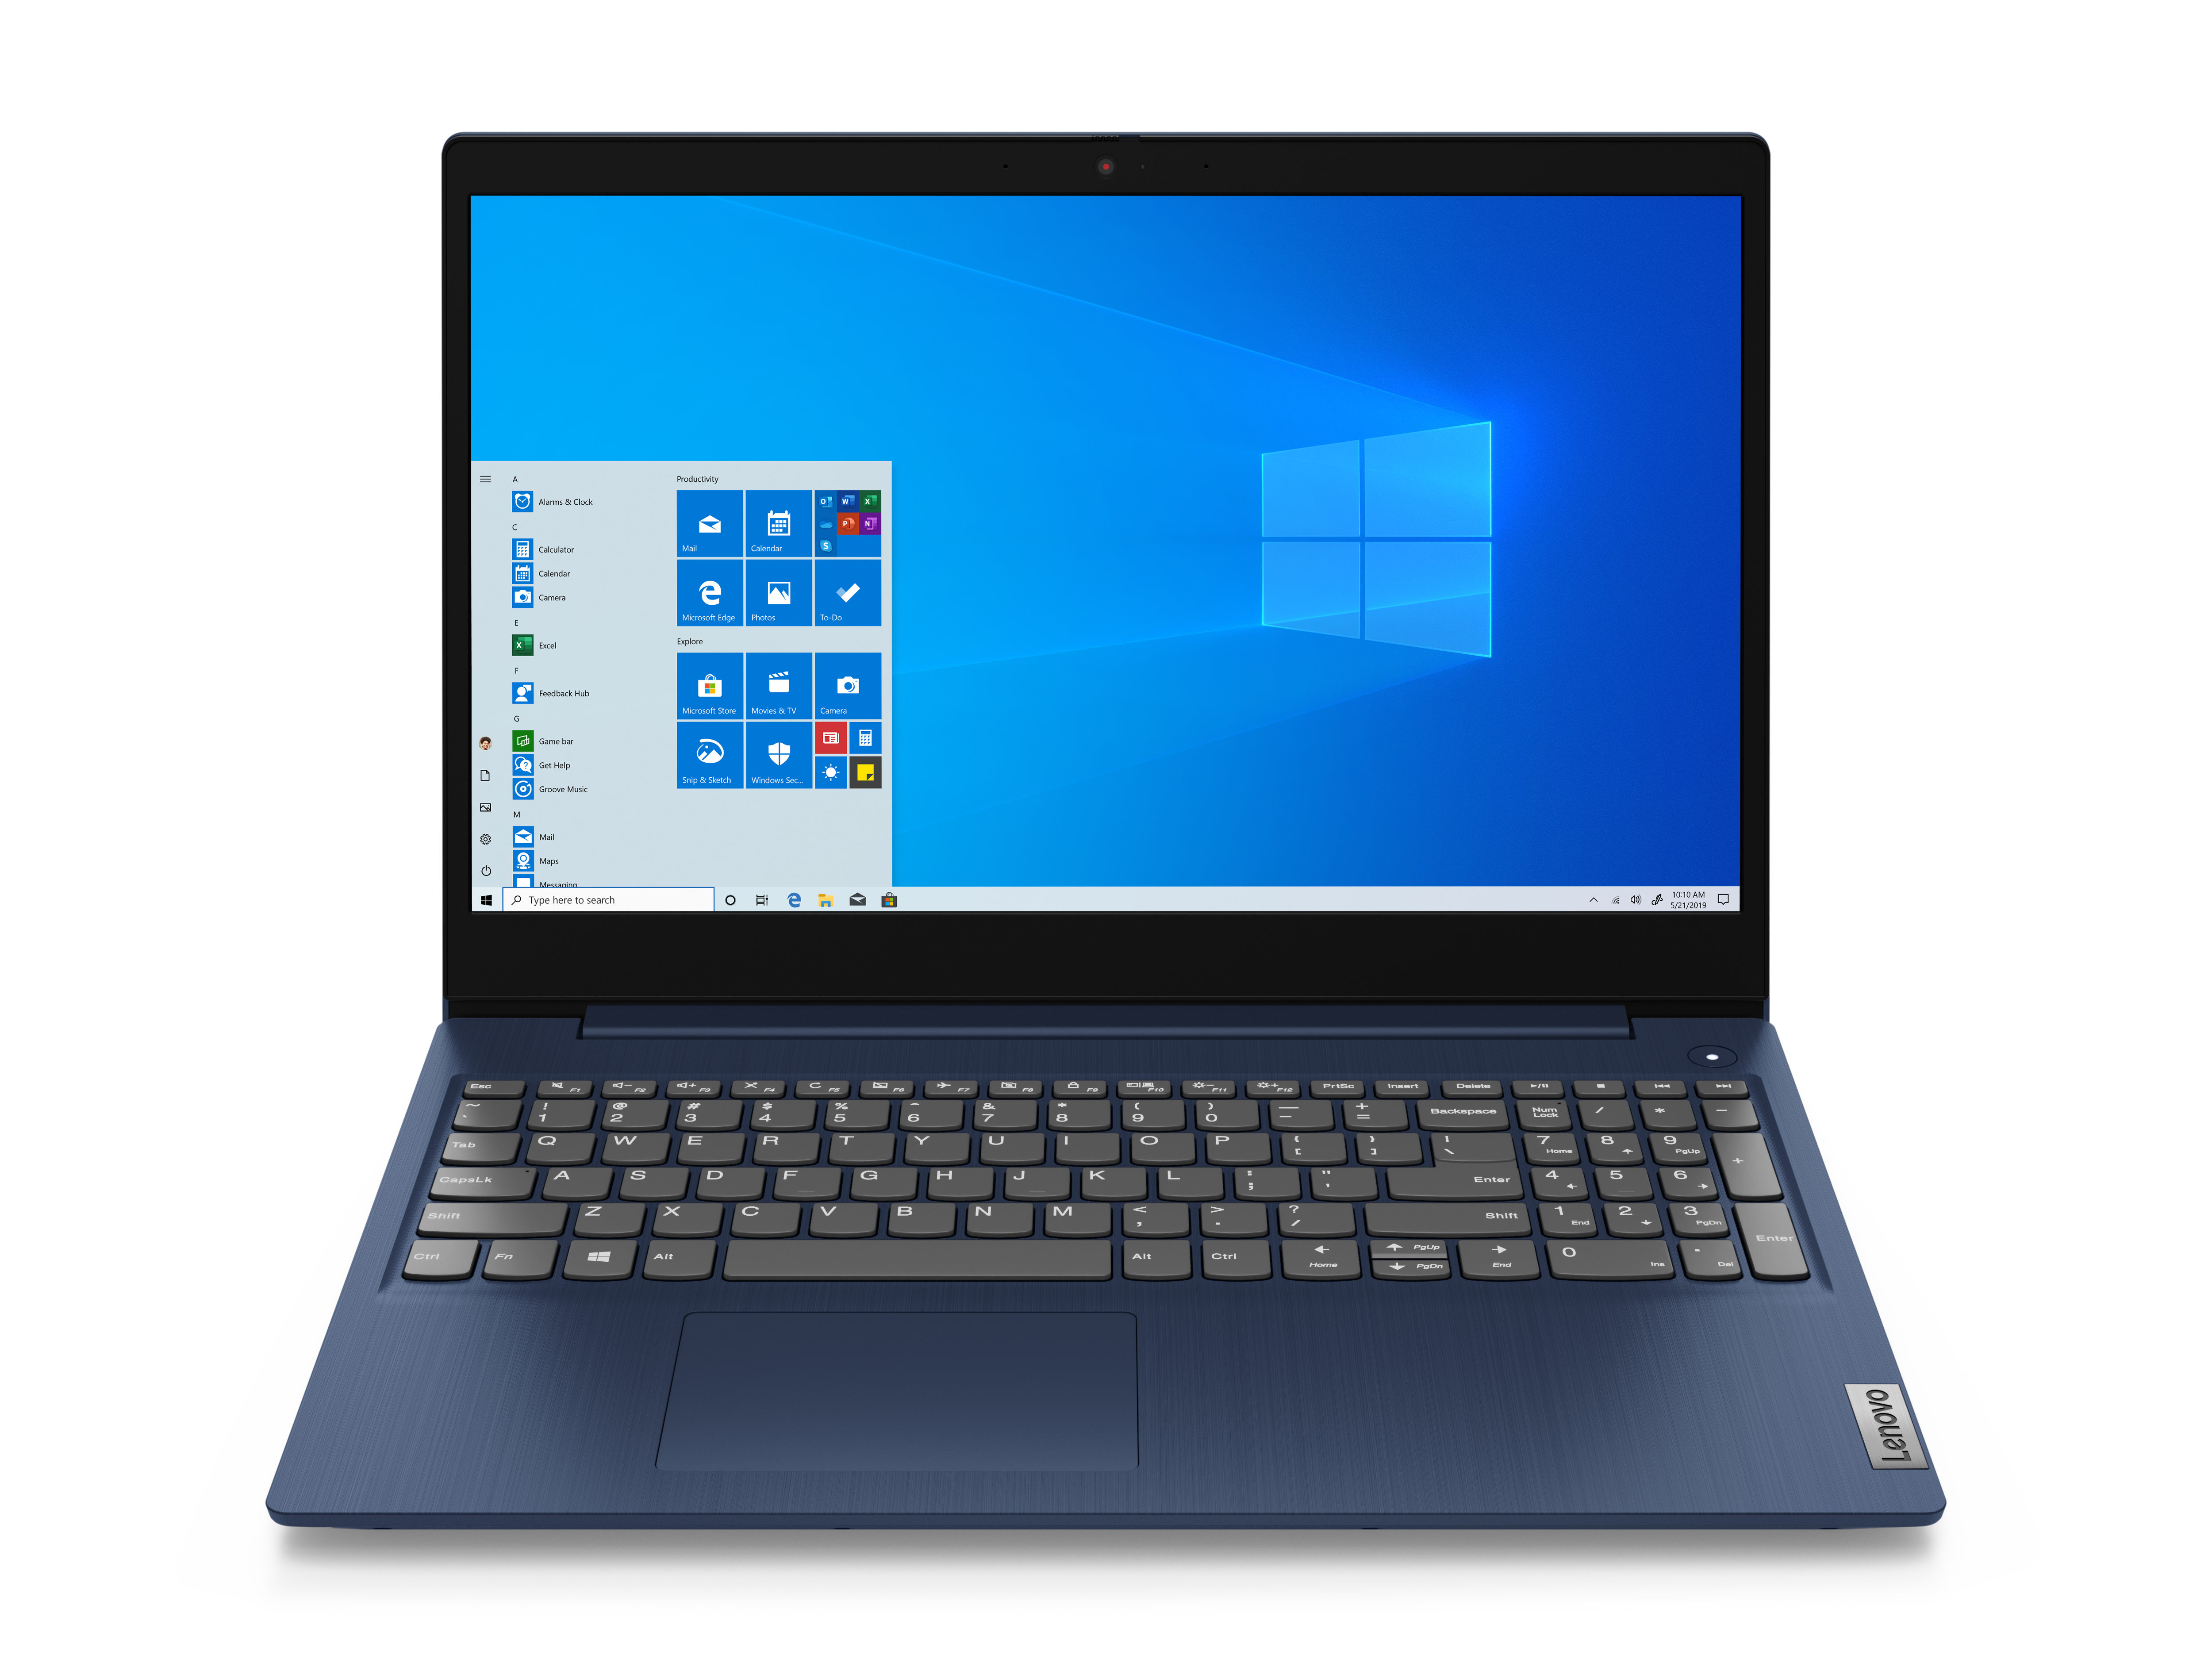 Lenovo IdeaPad 3 15" Laptop, Intel Core i5-1035G1 Quad-Core Processor, 8GB Memory, 256GB Solid State Drive, Windows 10, Abyss Blue, 81WE00ENUS - image 5 of 16